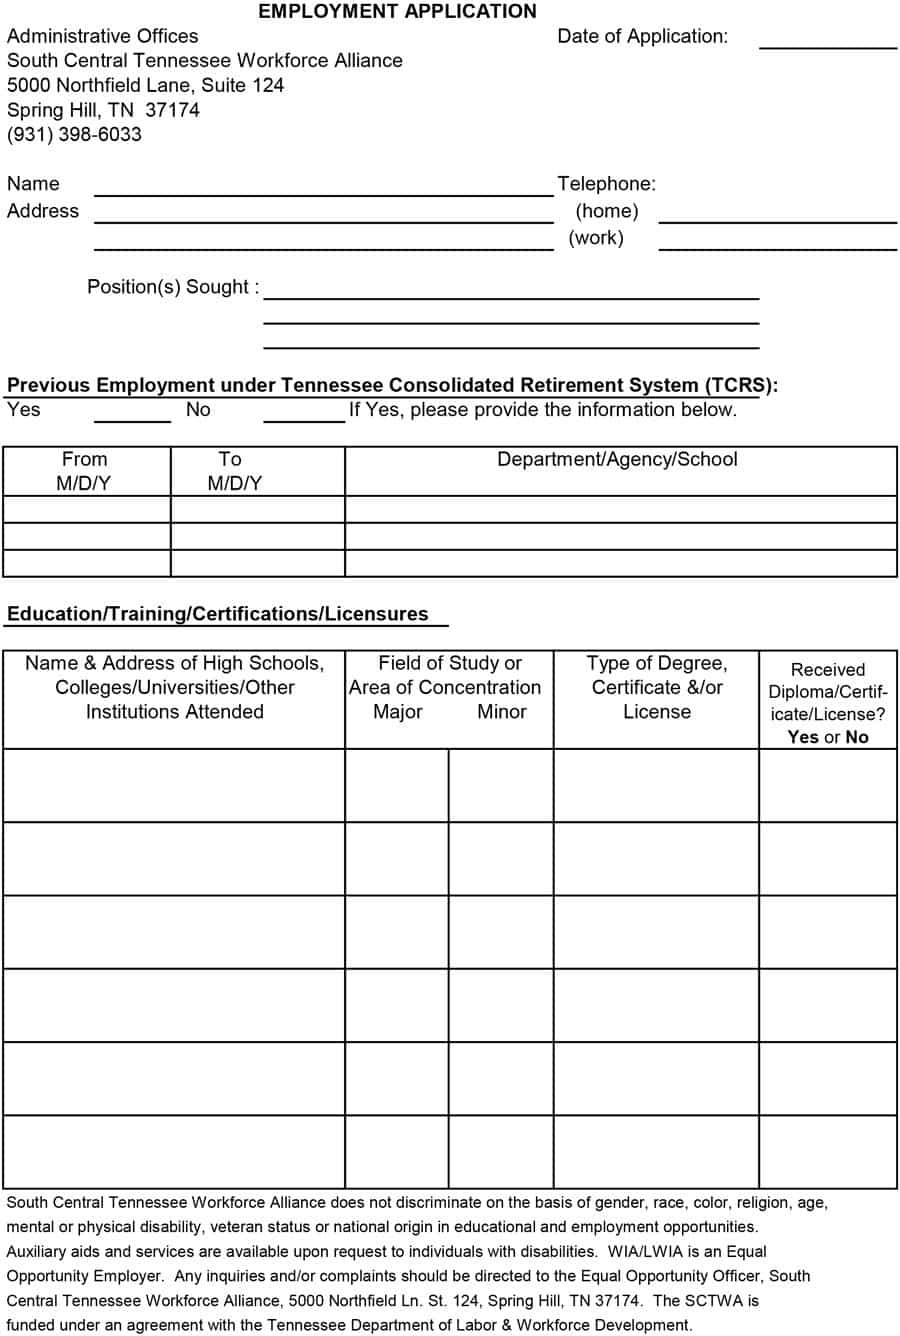 50 Free Employment / Job Application Form Templates [Printable] ᐅ - Application For Employment Form Free Printable